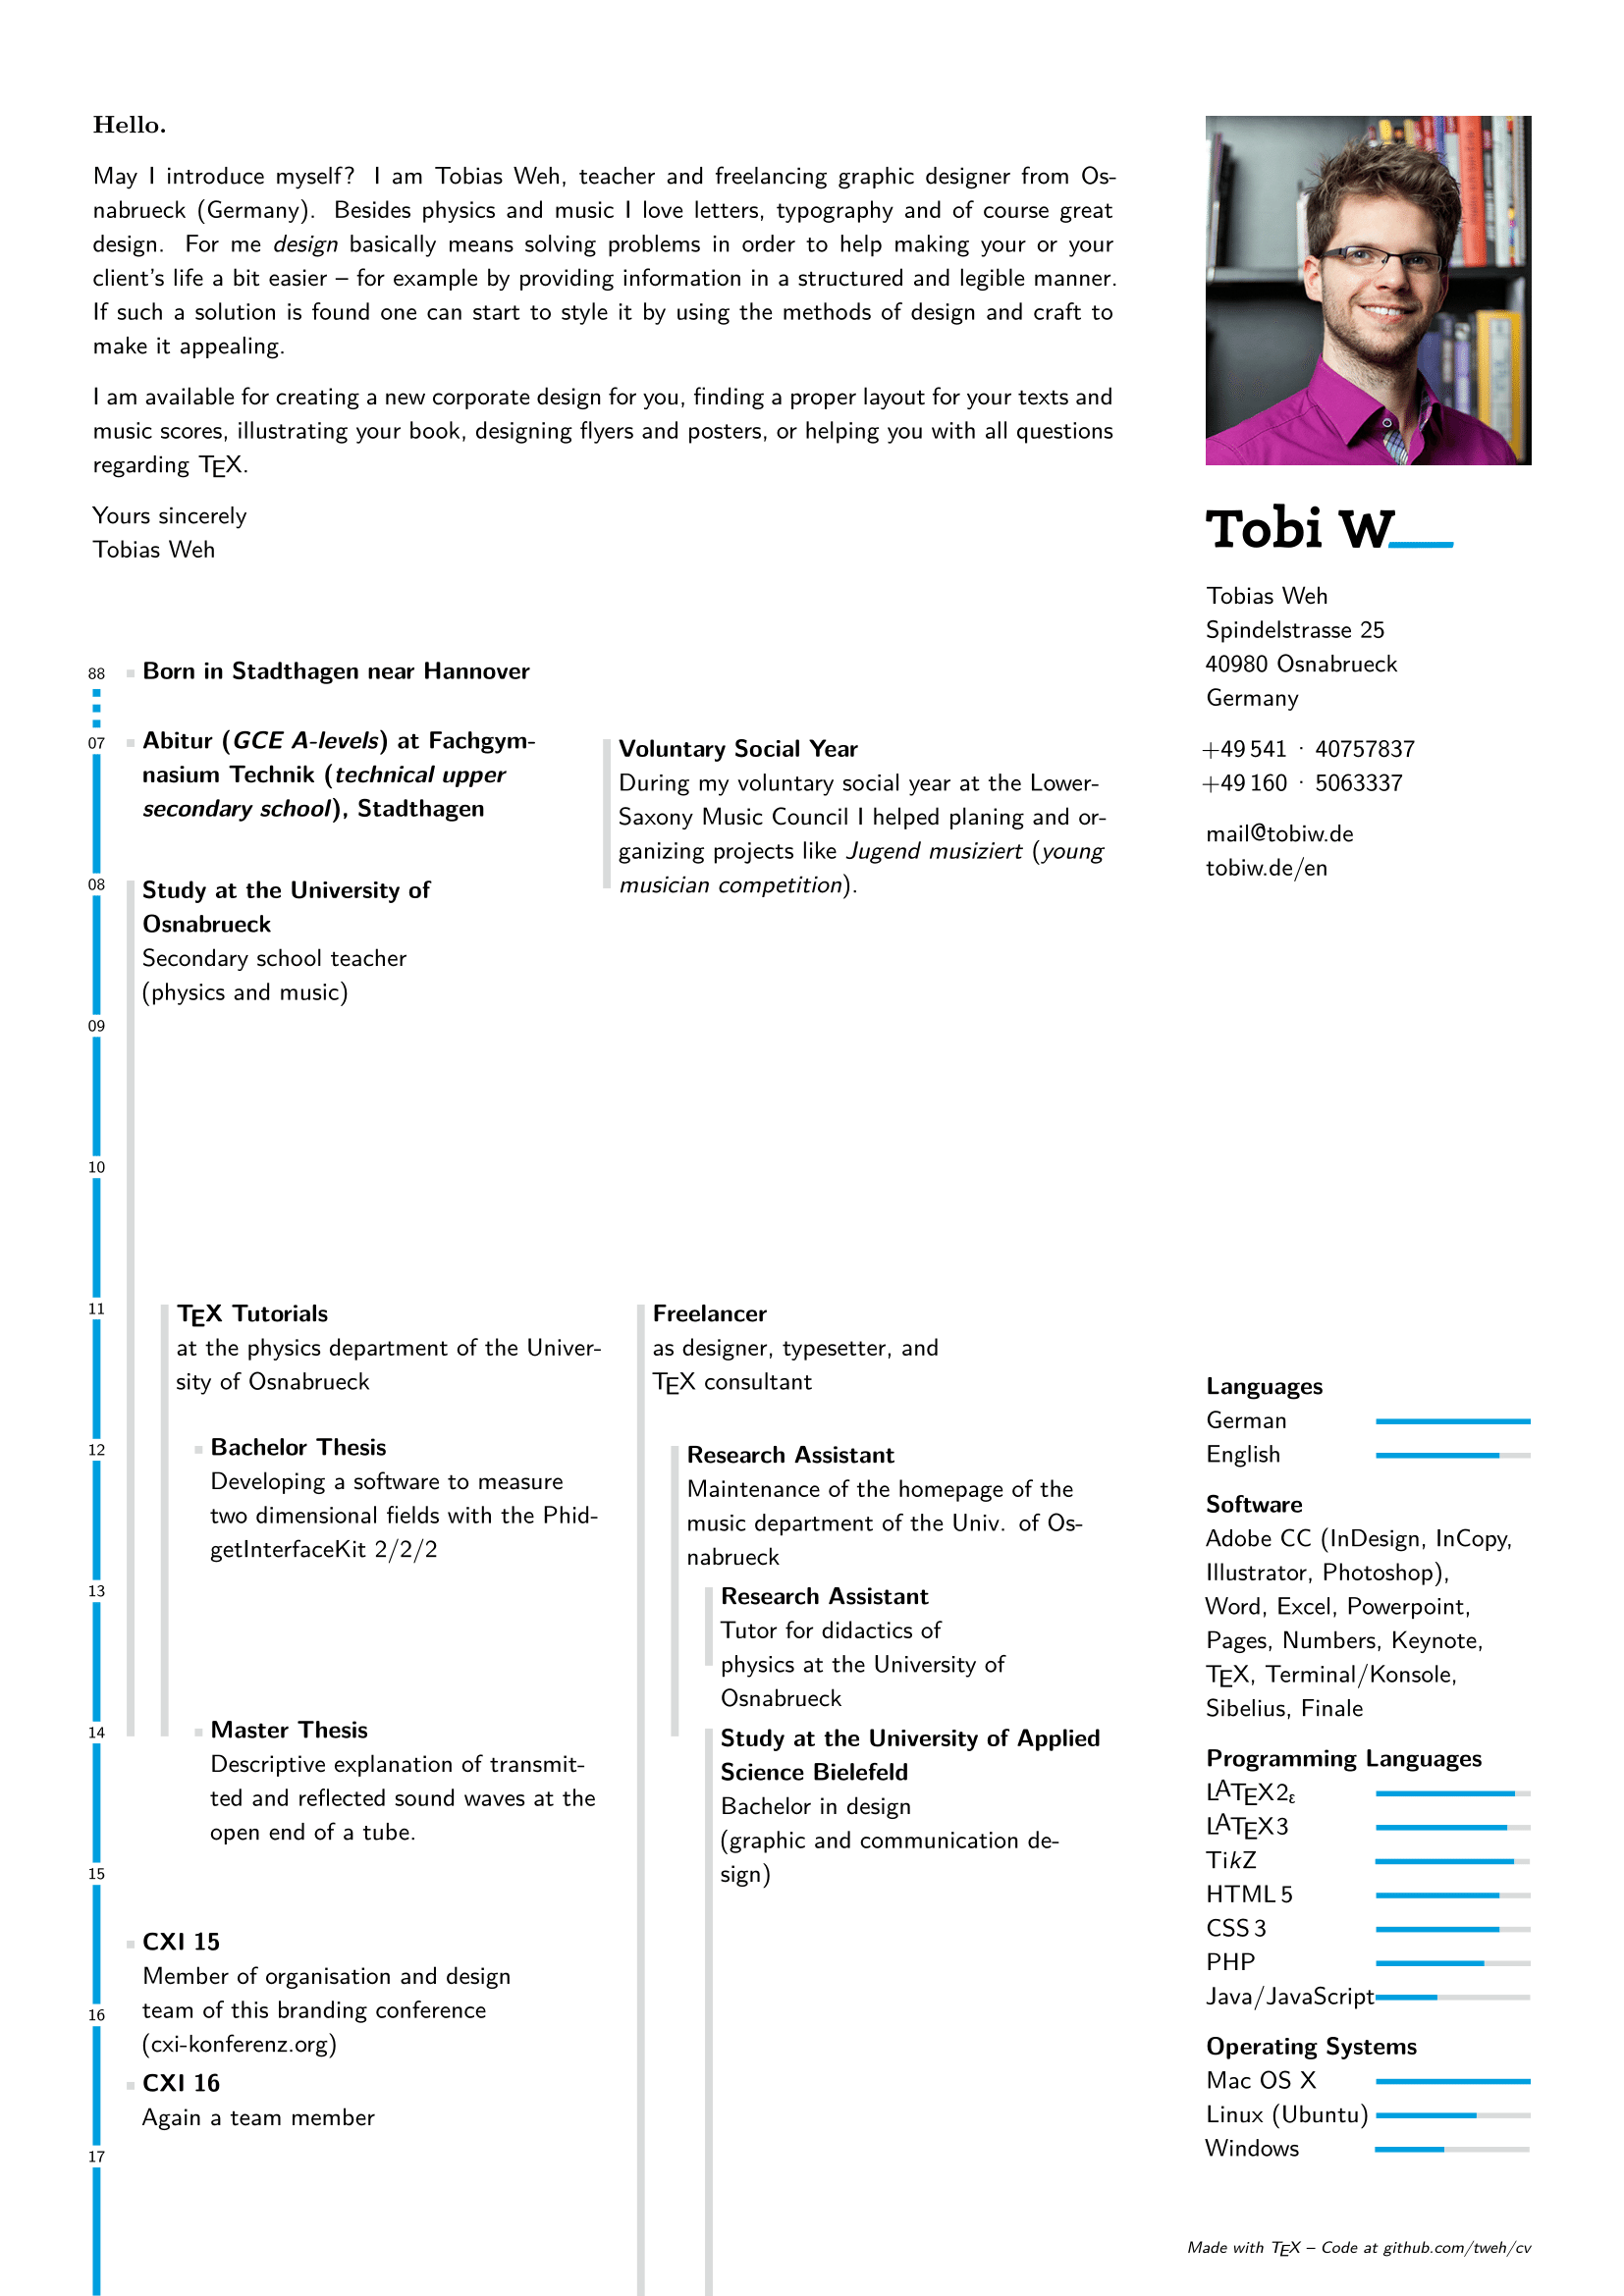 【DIY申请】CV和resume有什么区别，要怎么写？ - 问吧